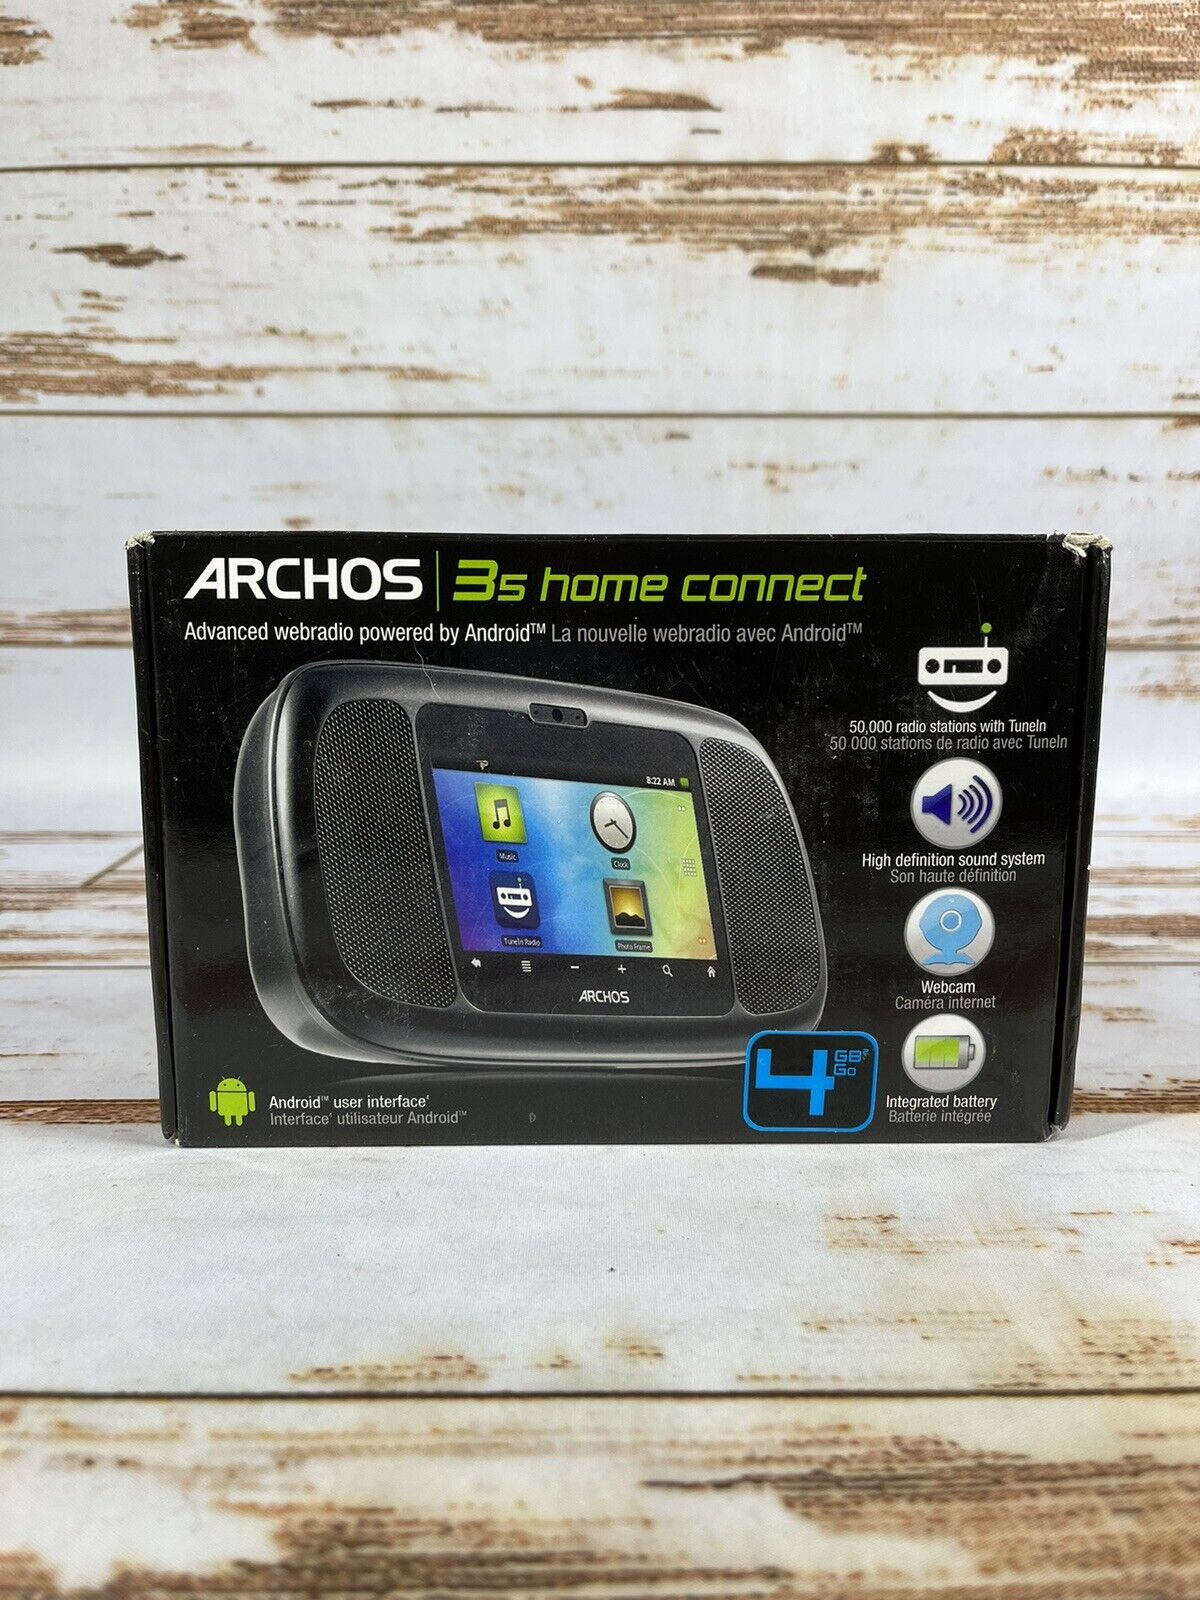 Archos 35 Network Home Connect Radio 4 GB 3.5-in Screen Wi-Fi Black (501744)